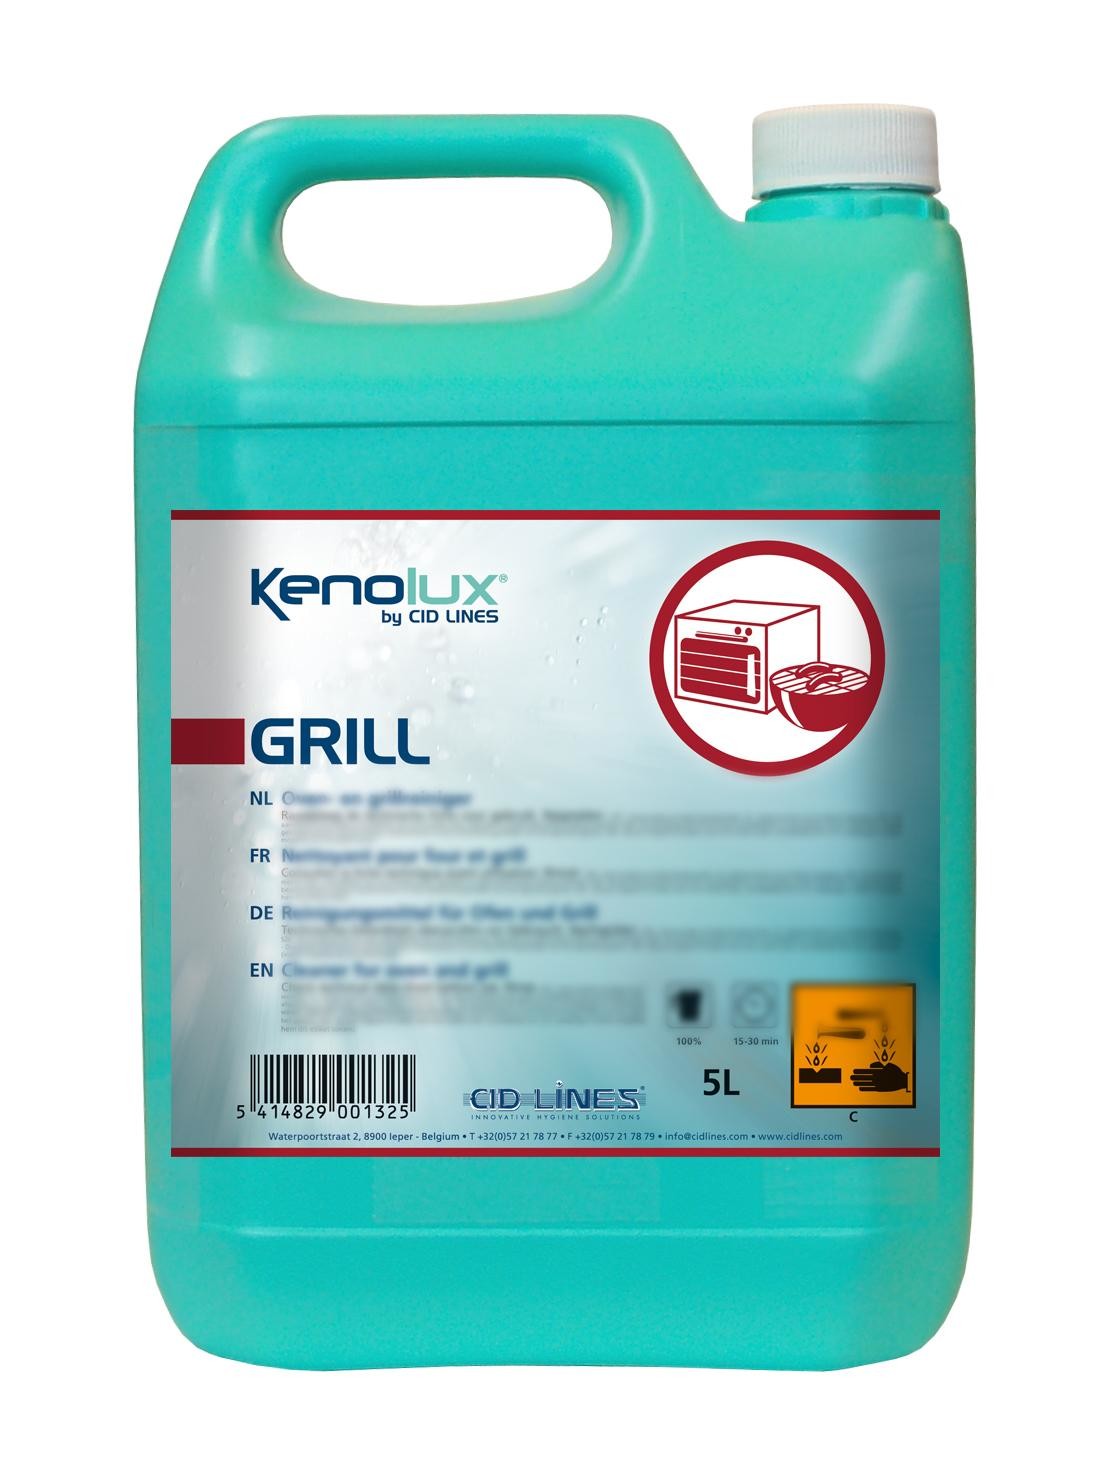 Kenolux Grill 5L CID Lines oven & grillreiniger